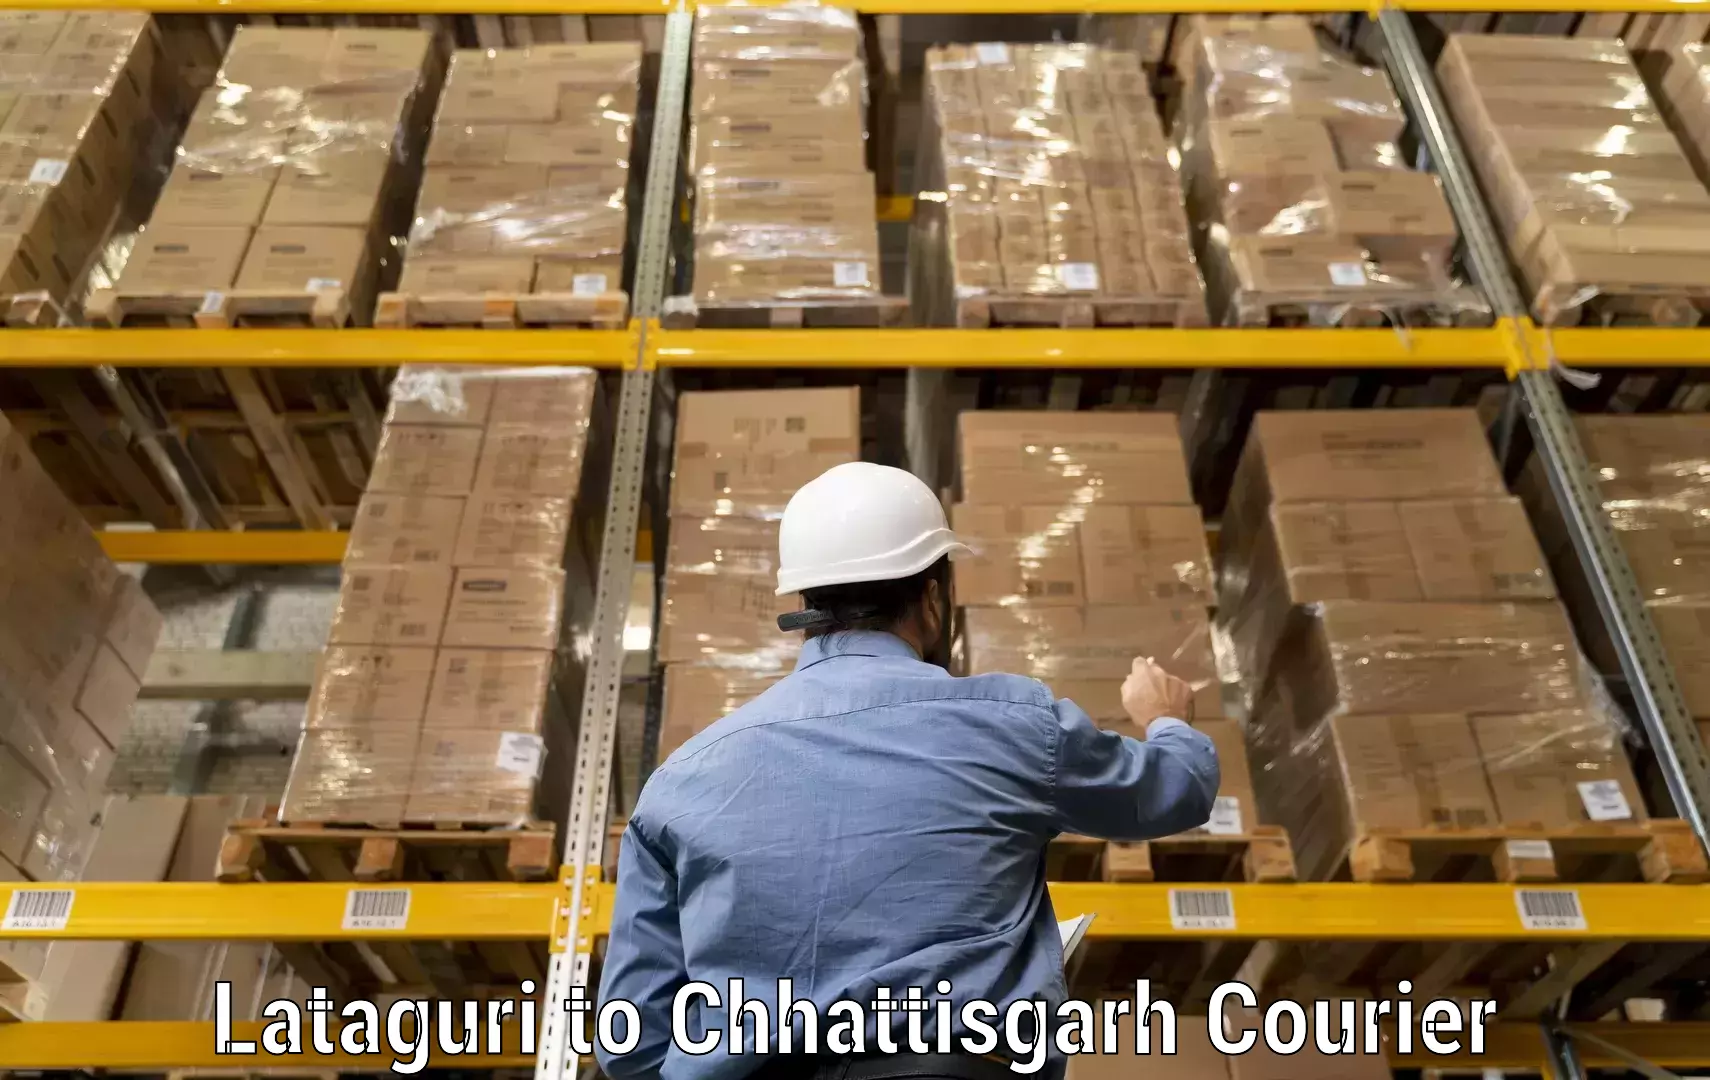 Flexible delivery schedules Lataguri to Patna Chhattisgarh